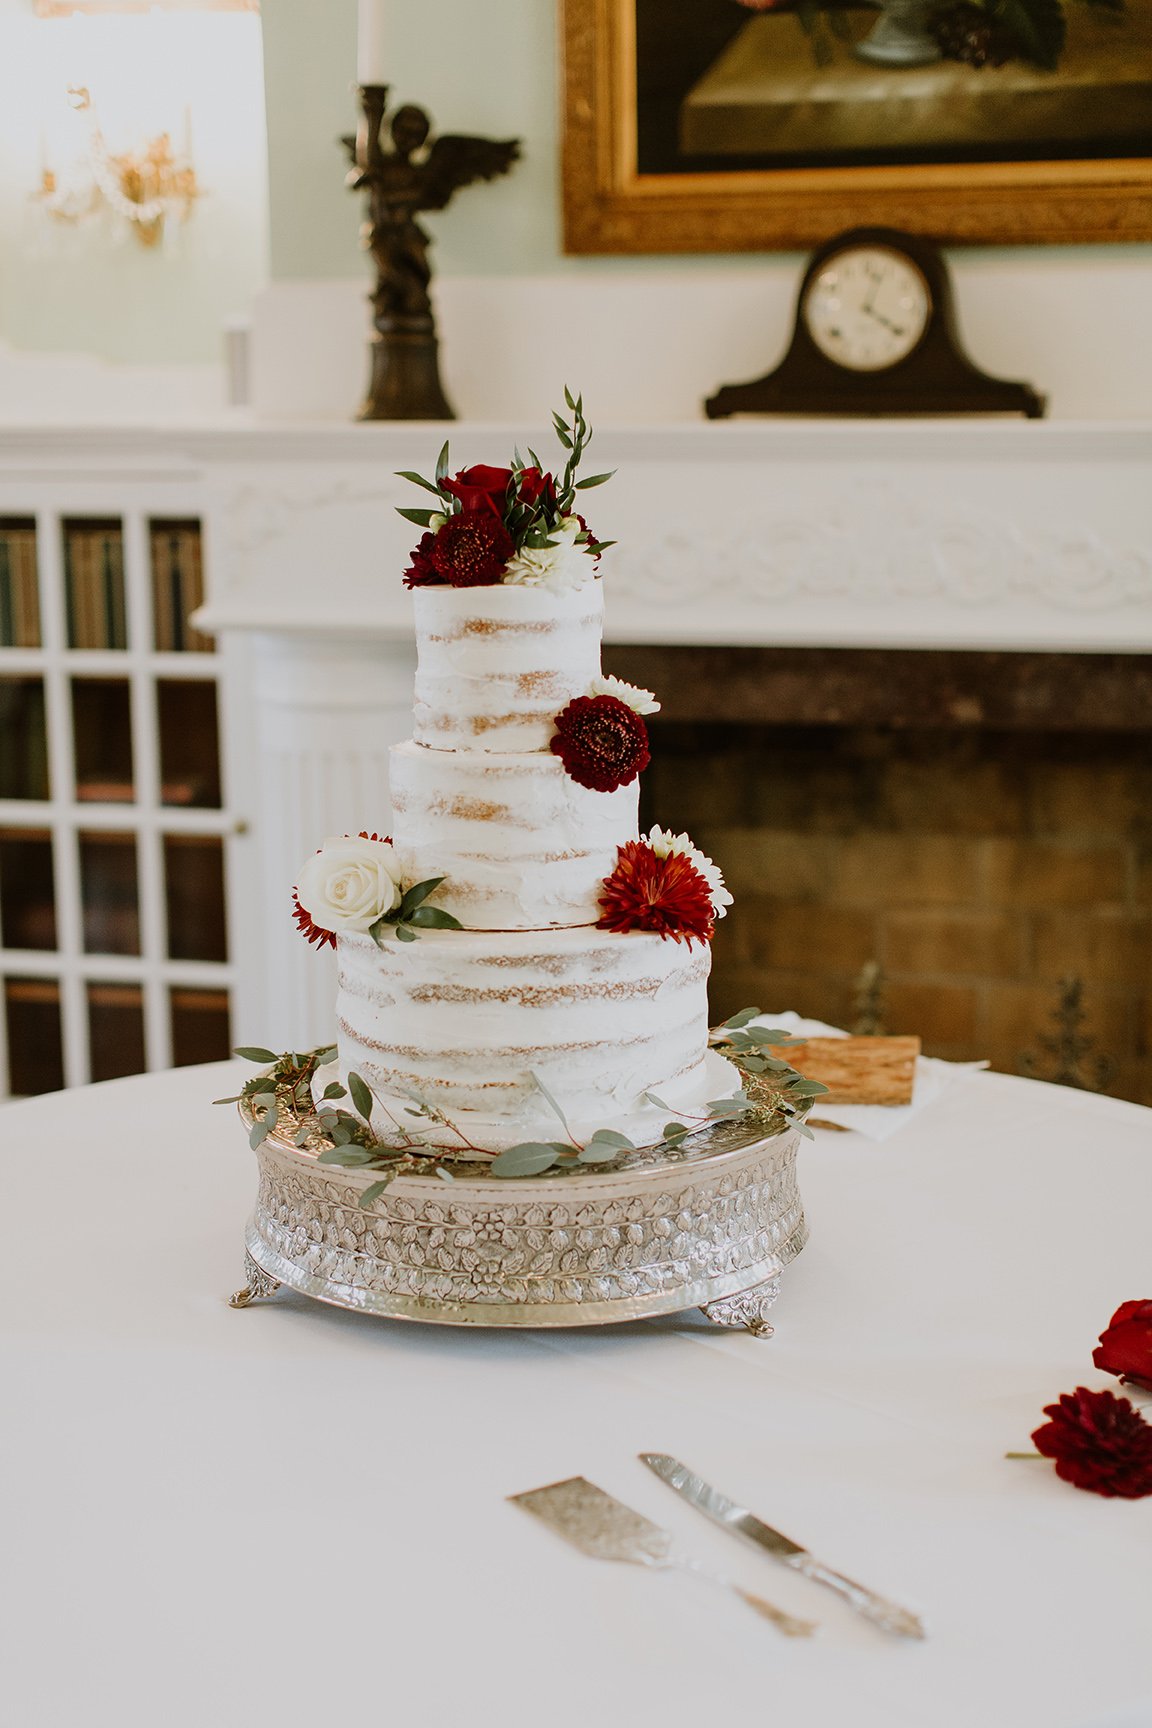 gardens at madeley manor, wedding cake, naked cake, white & red, real wedding, texas